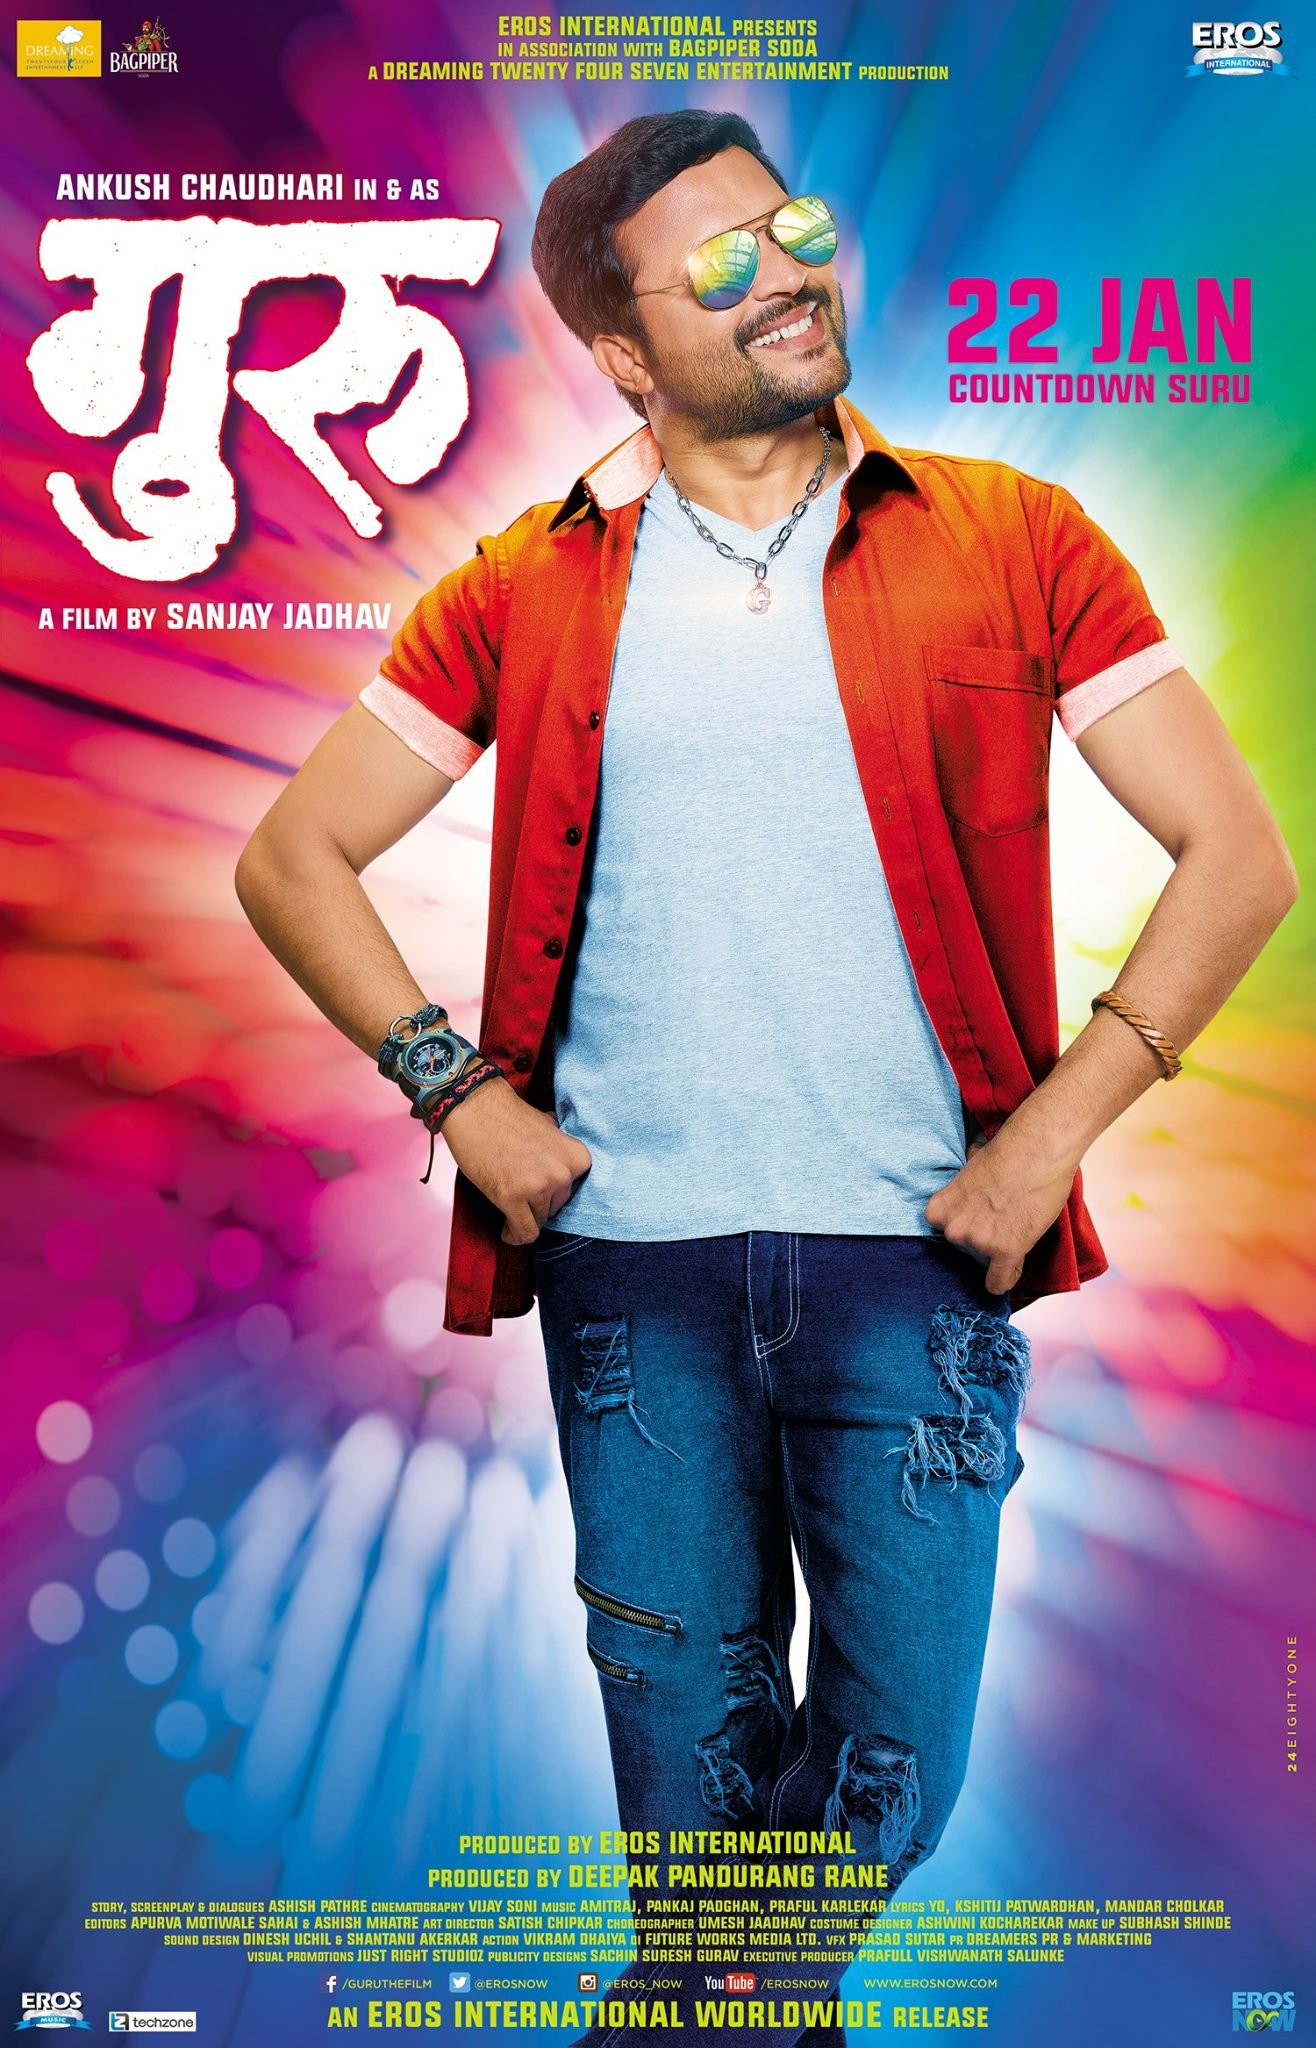 Marathi poster of the movie Guru